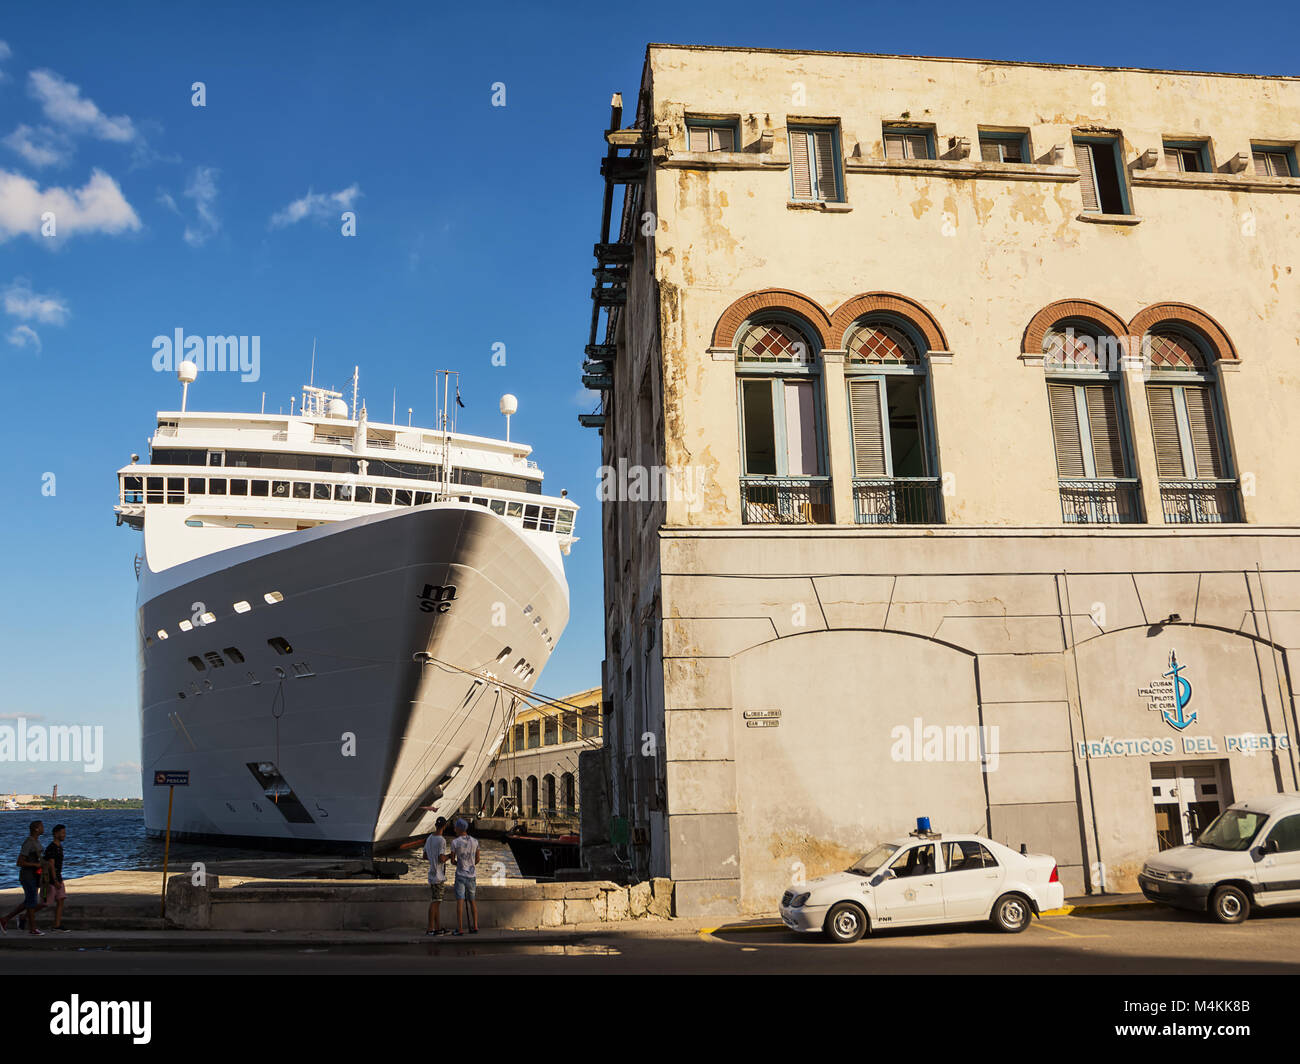 Terminal de cruceros de cuba fotografías e imágenes de alta resolución -  Alamy